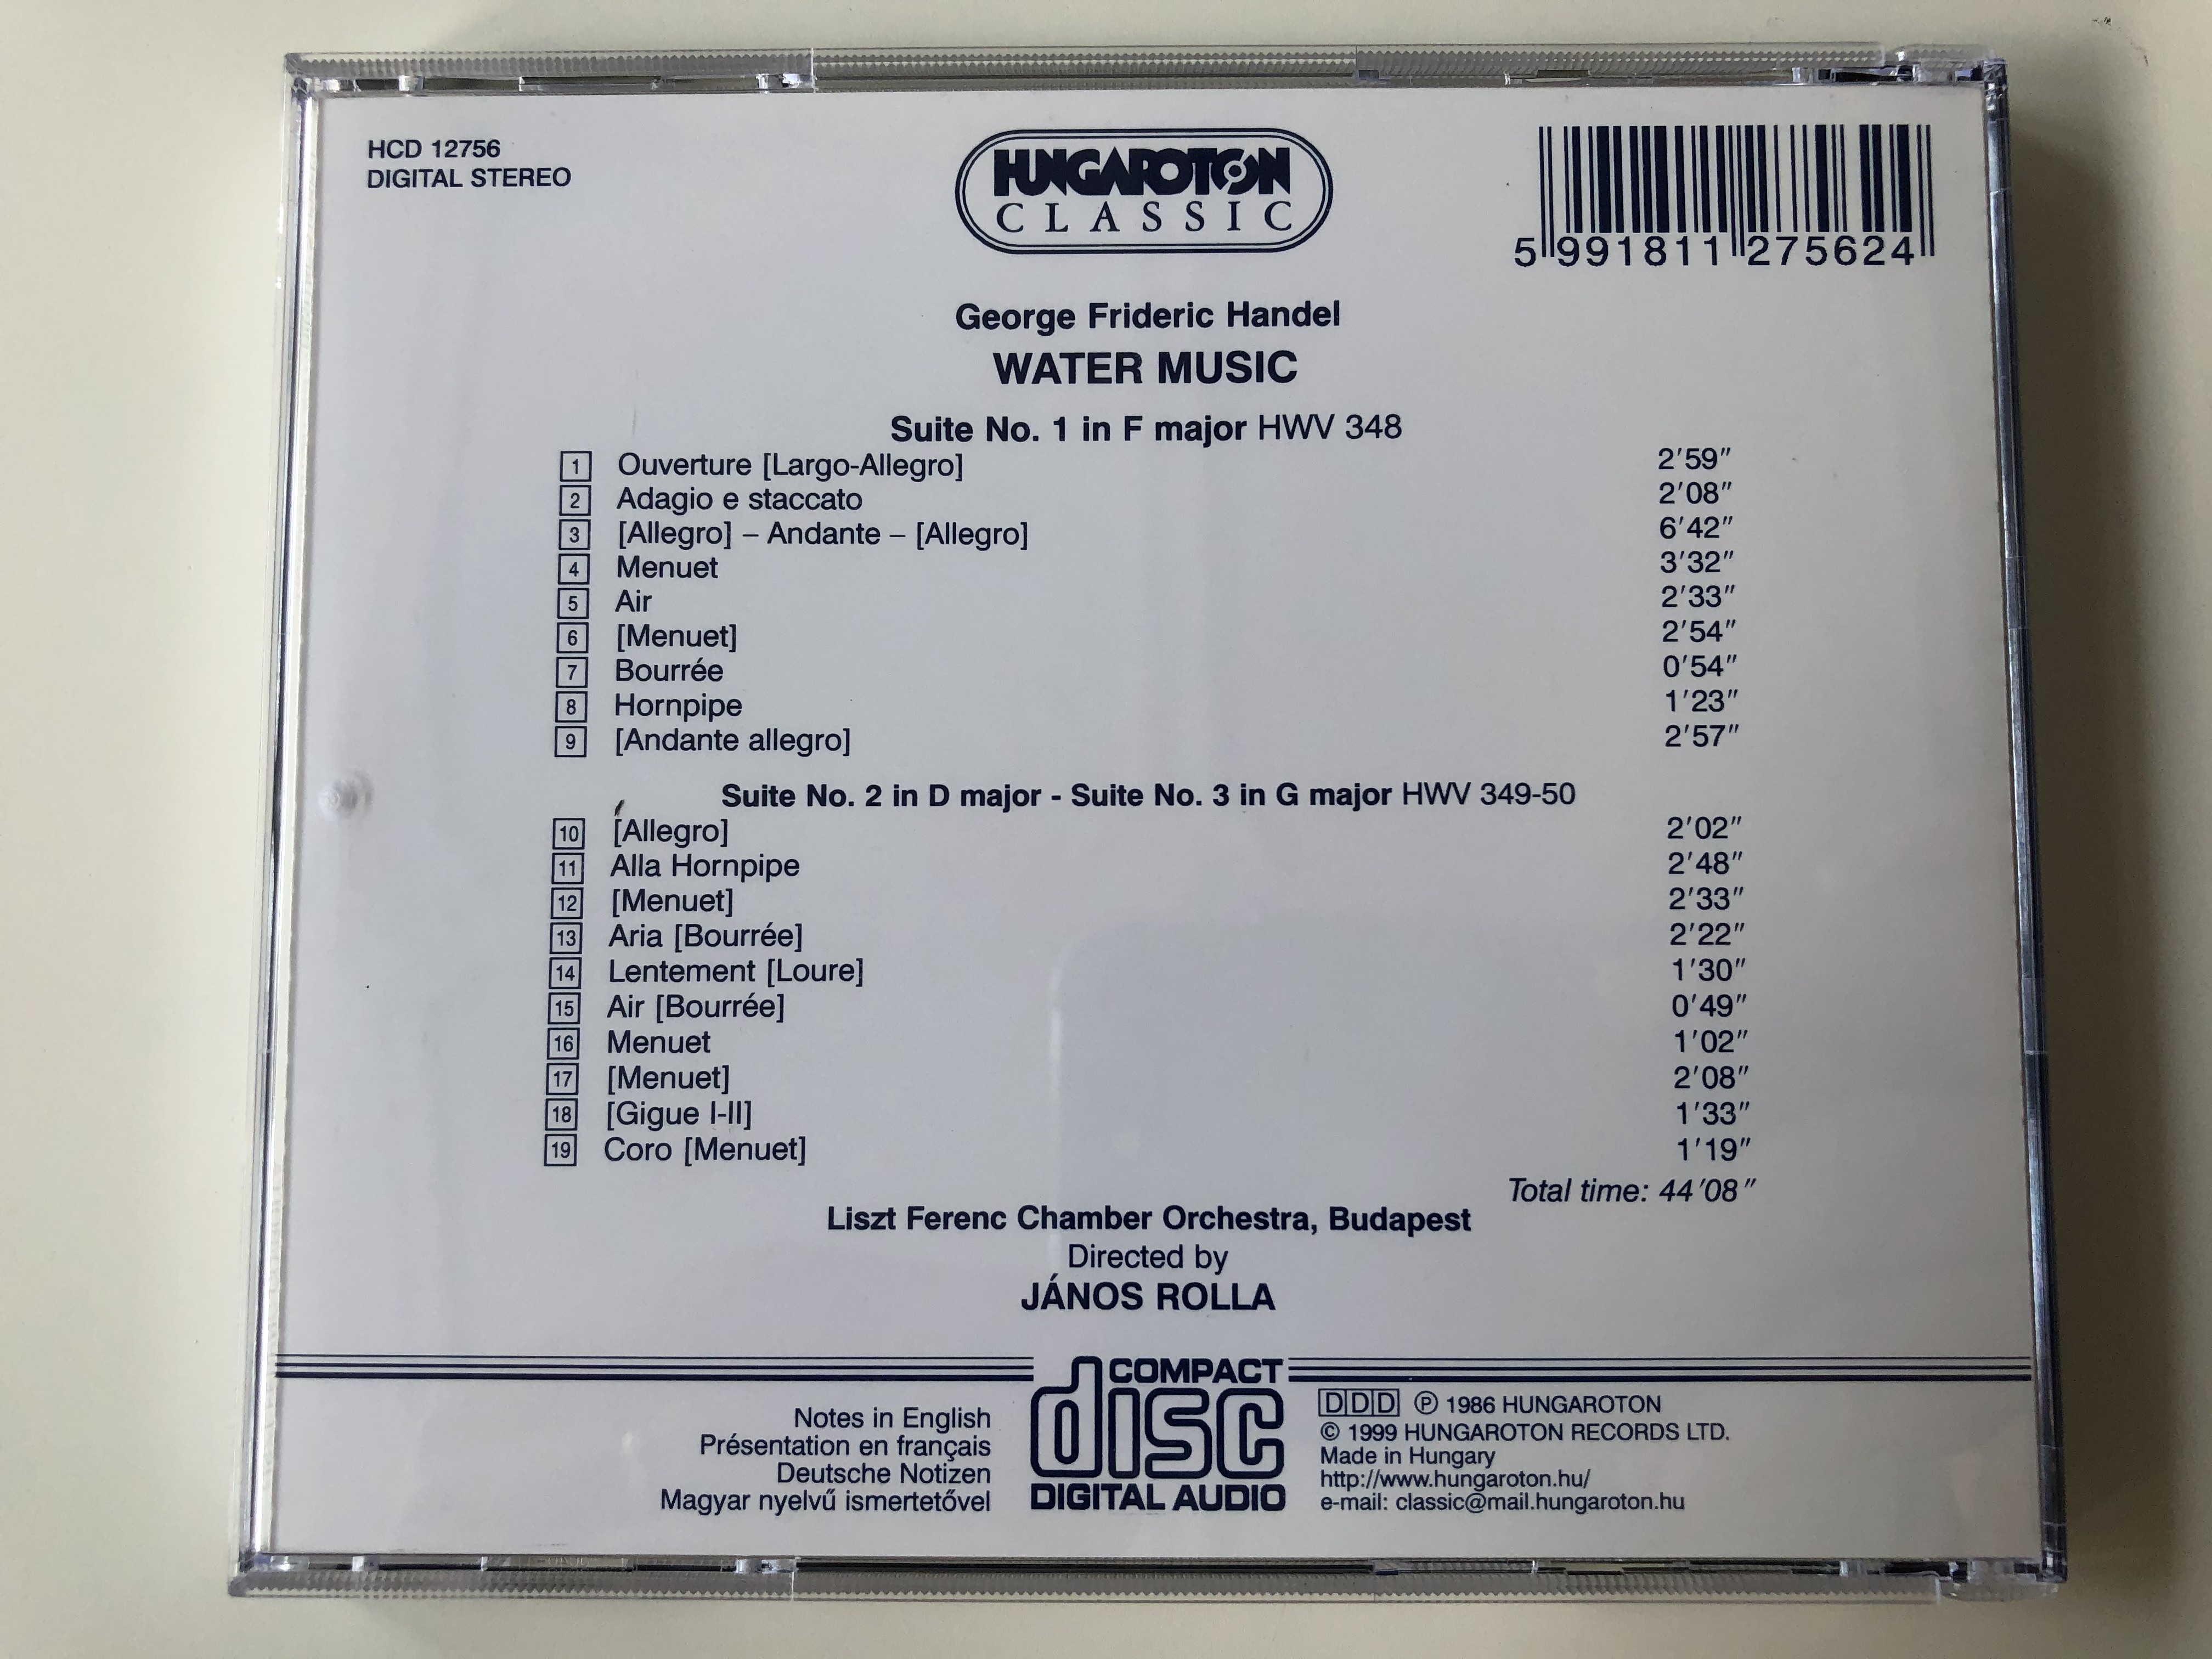 handel-water-music-liszt-ferenc-chamber-orchestra-budapest-j-nos-rolla-hungaroton-classic-audio-cd-1994-stereo-hcd-12756-10-.jpg